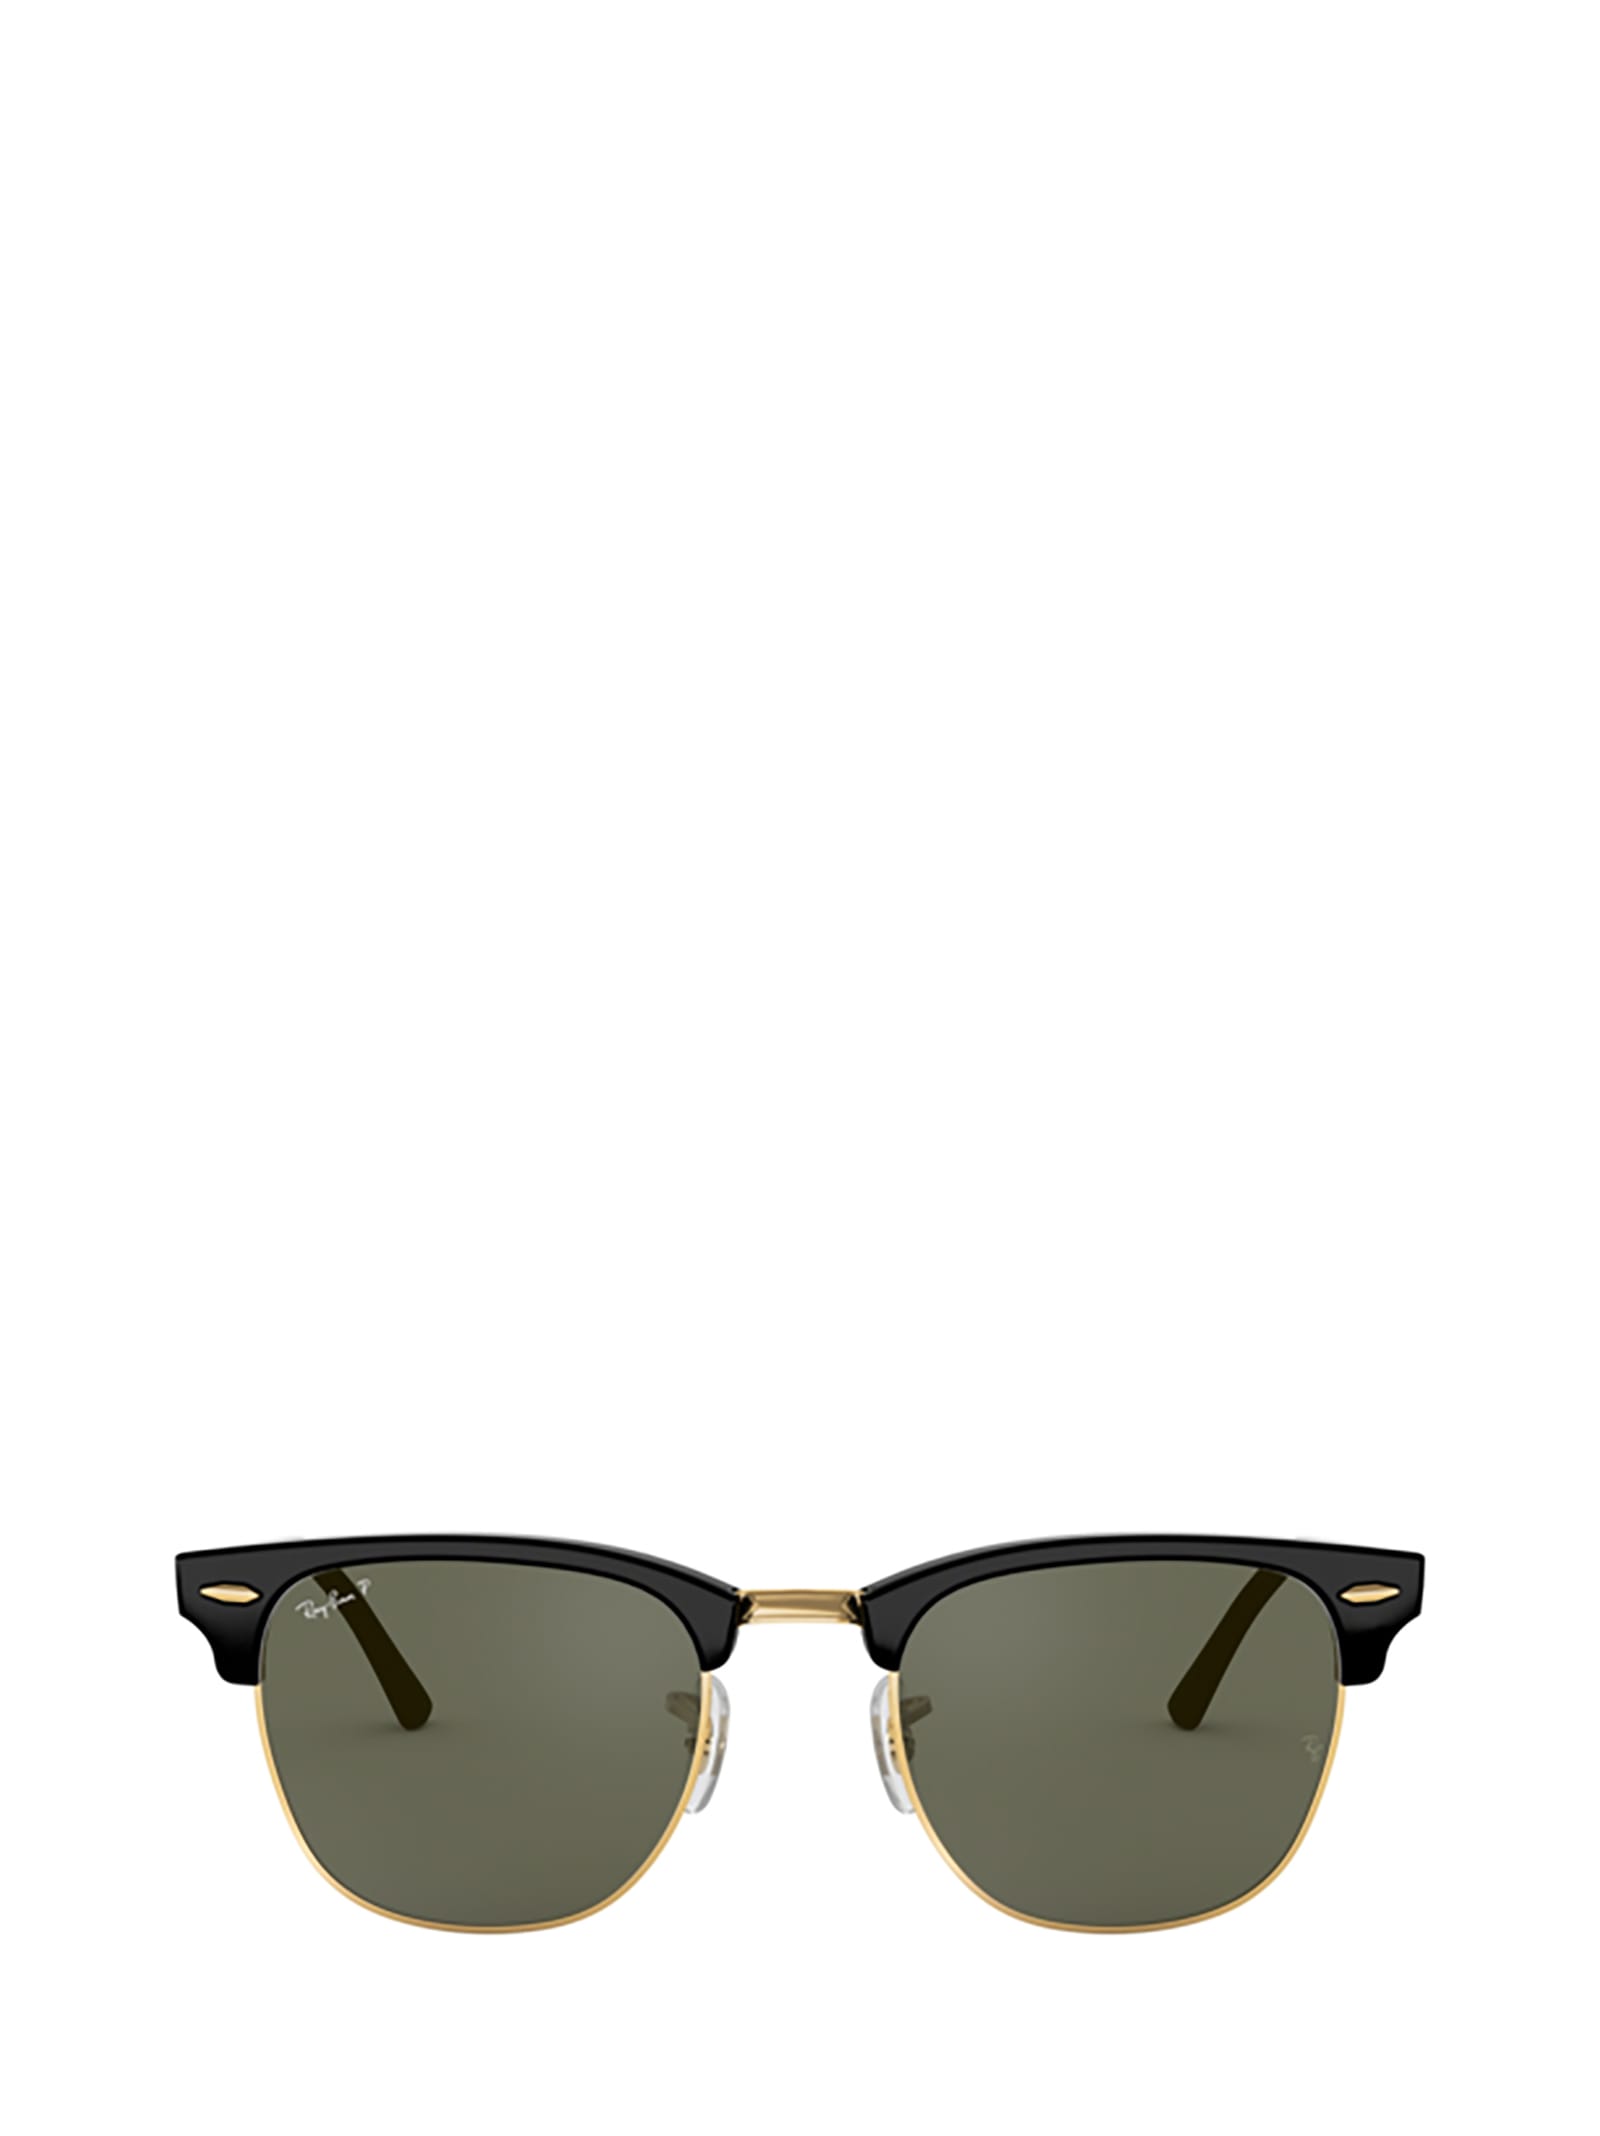 Ray Ban Ray-ban Rb3016 Black Sunglasses